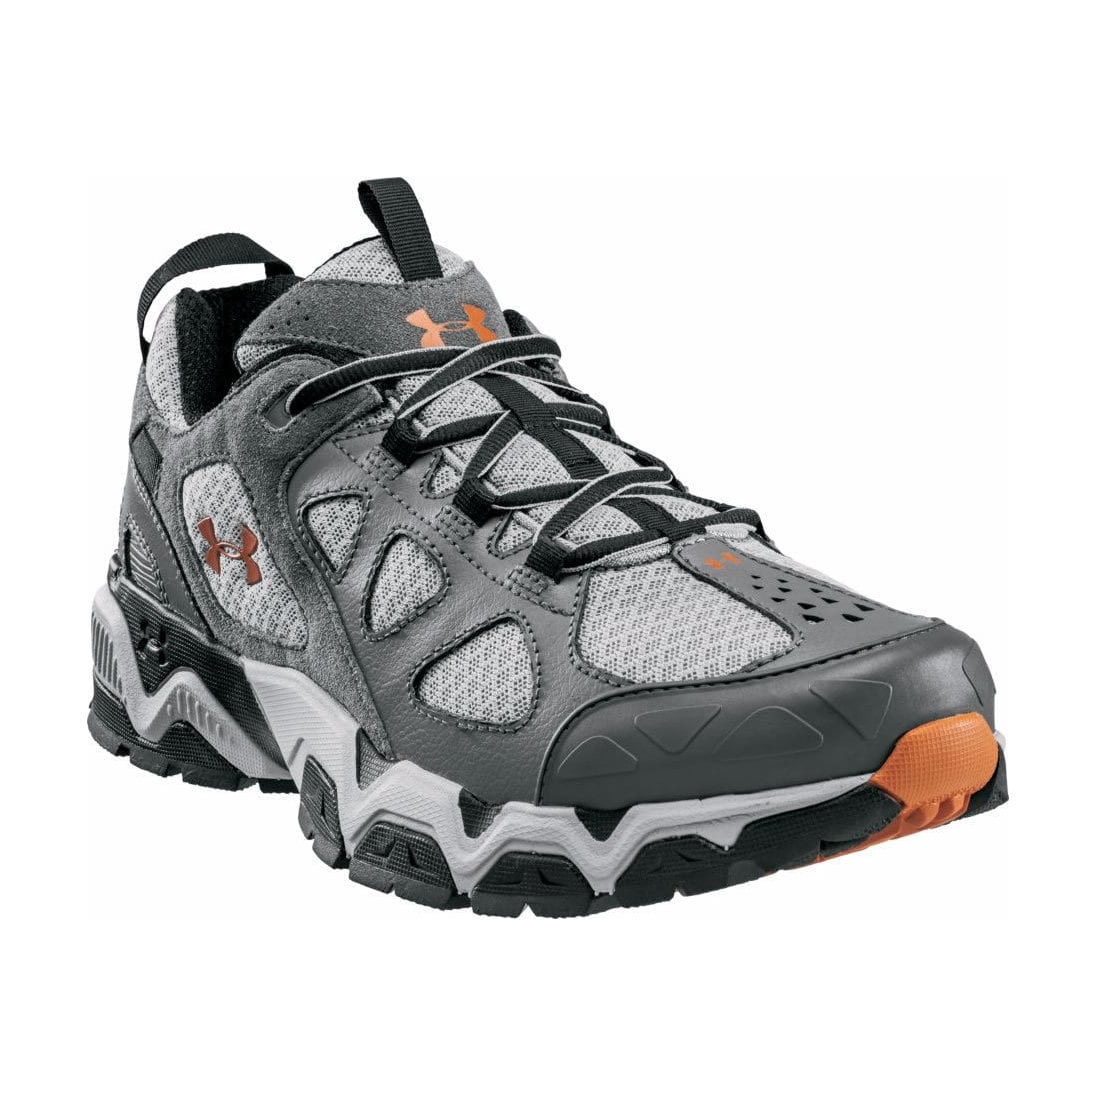 Under Armour 3.0 Men's Hiking Shoes 1287351-076 - Rhino Gray/Gray Wolf - - Walmart.com